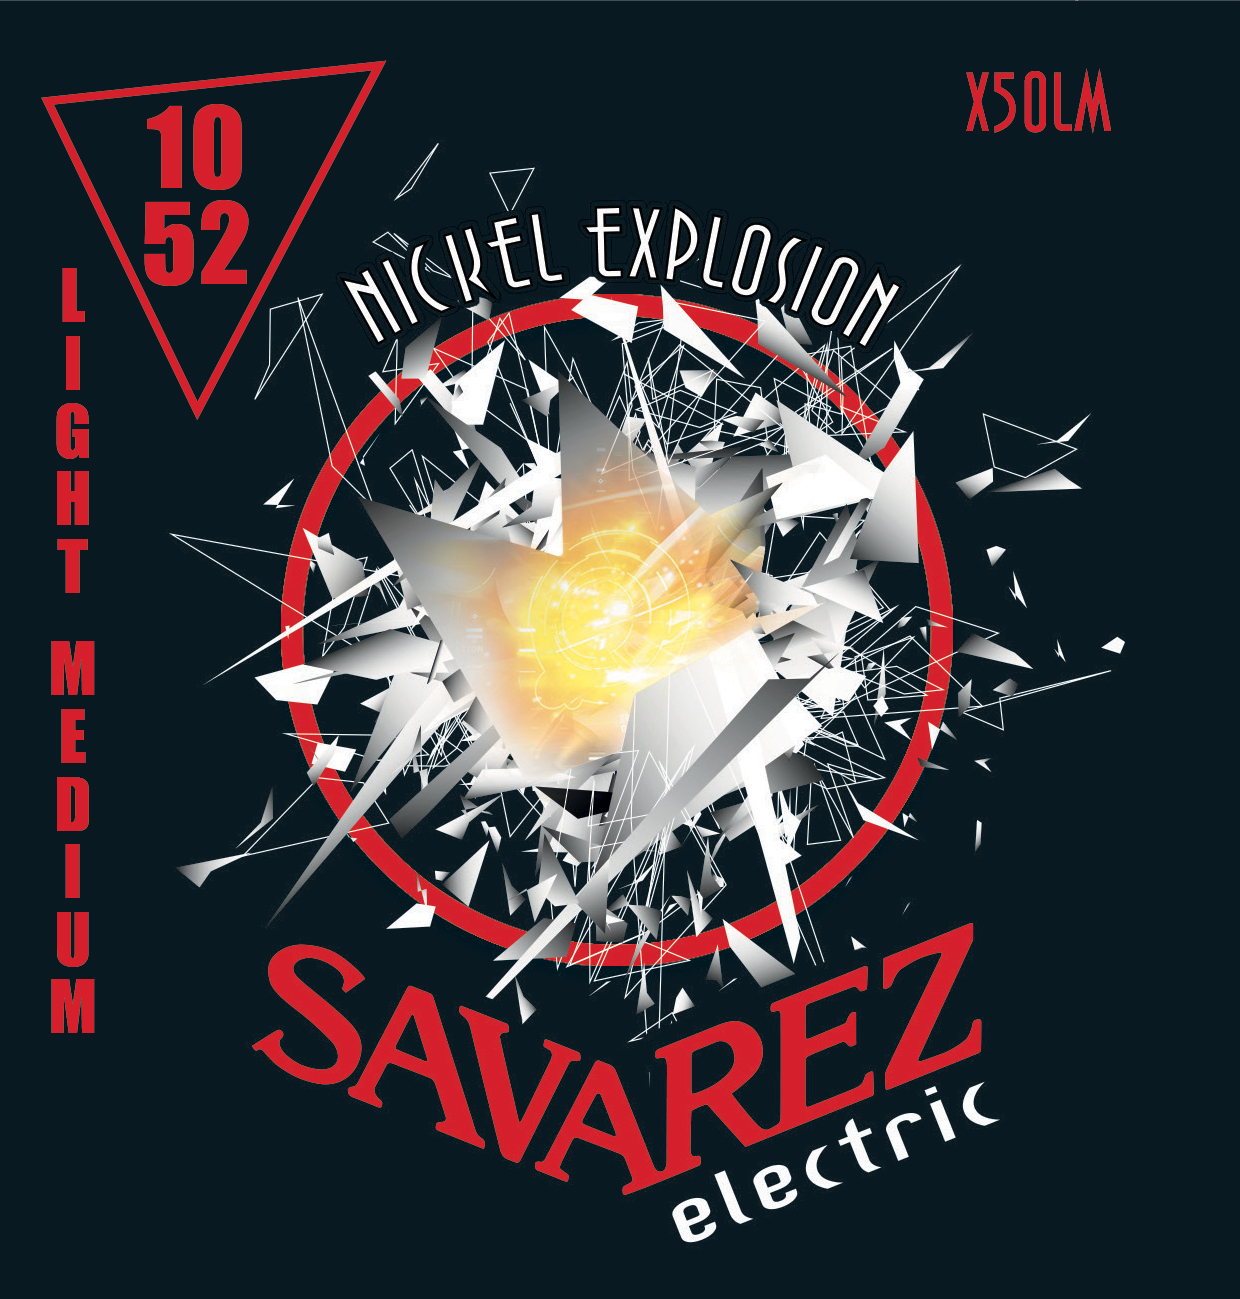 SAVAREZ ELECTRIC NICKEL EXPLOSION X50LM